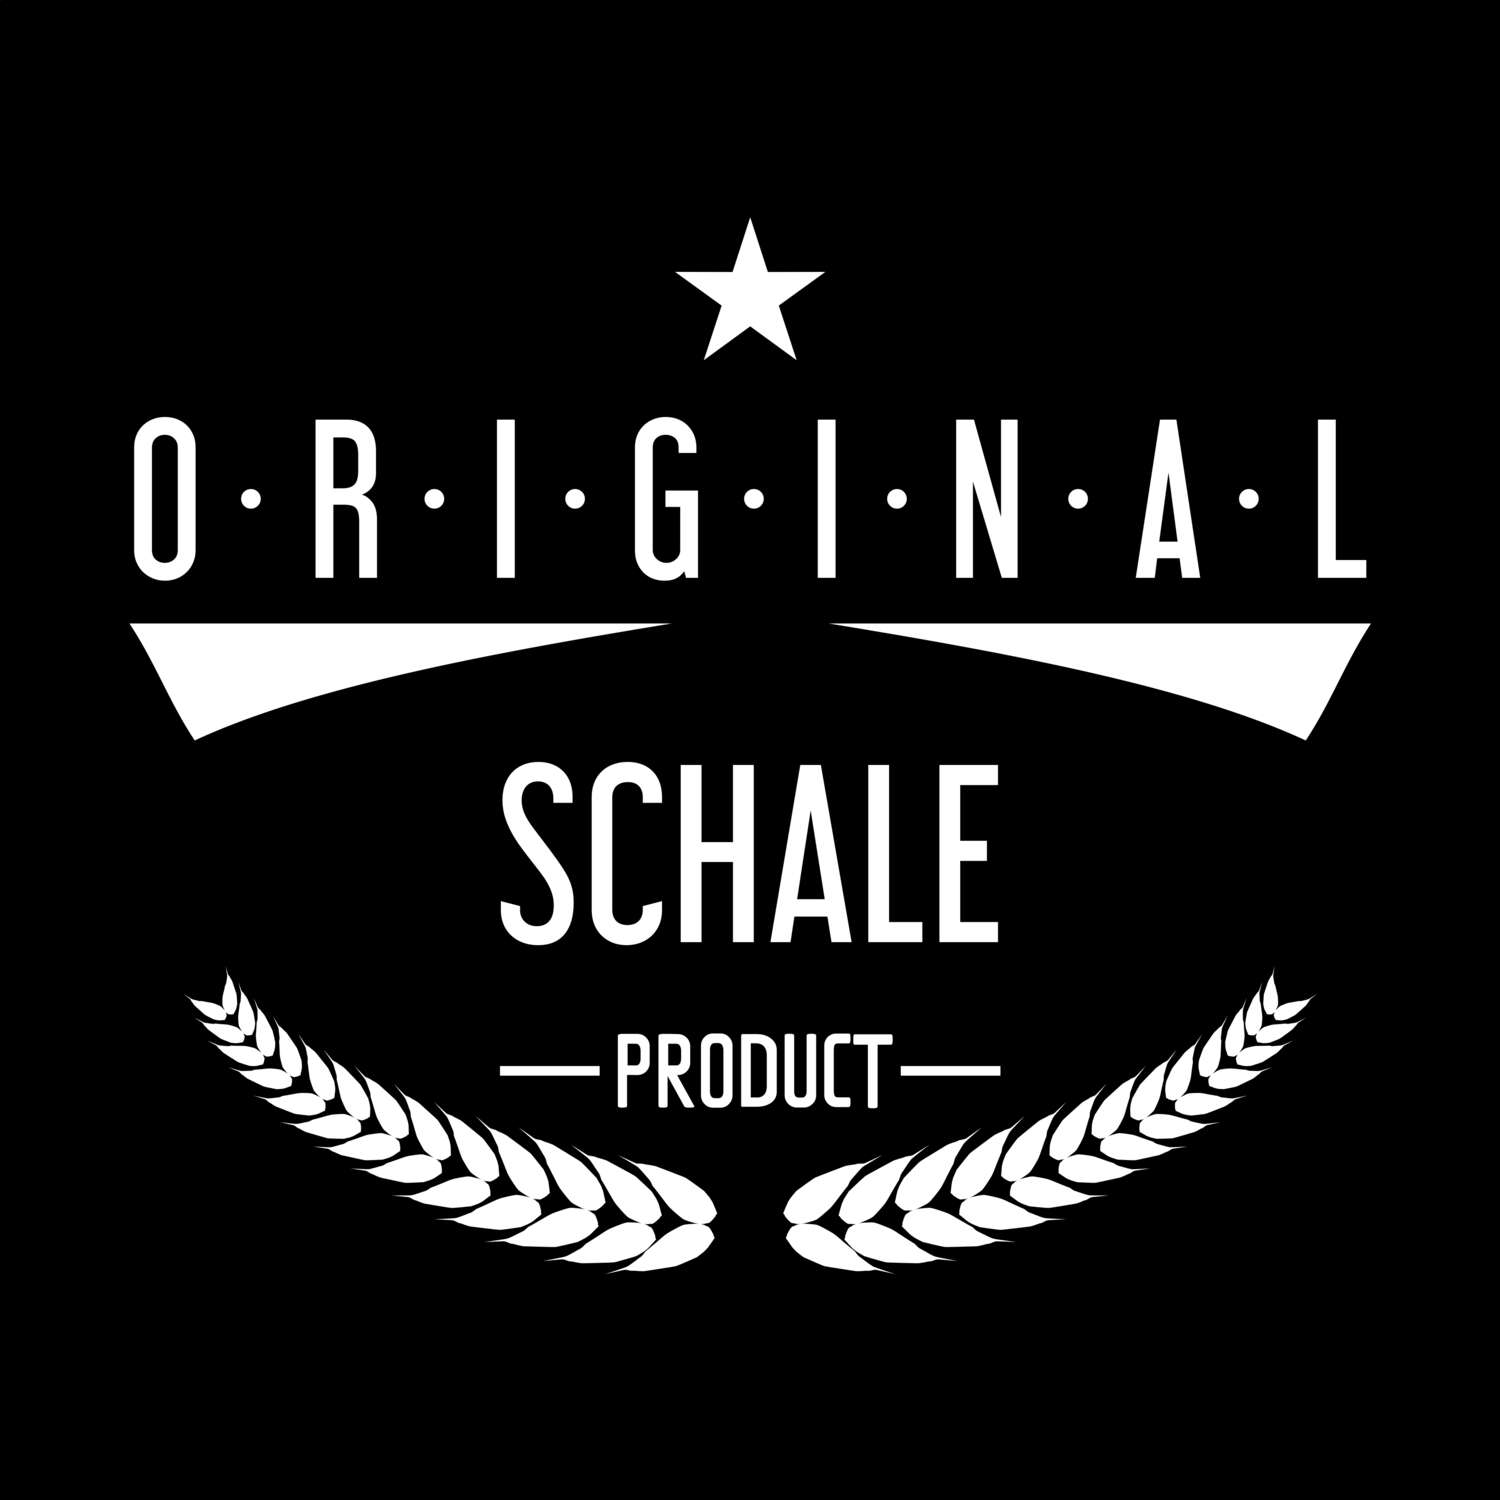 Schale T-Shirt »Original Product«